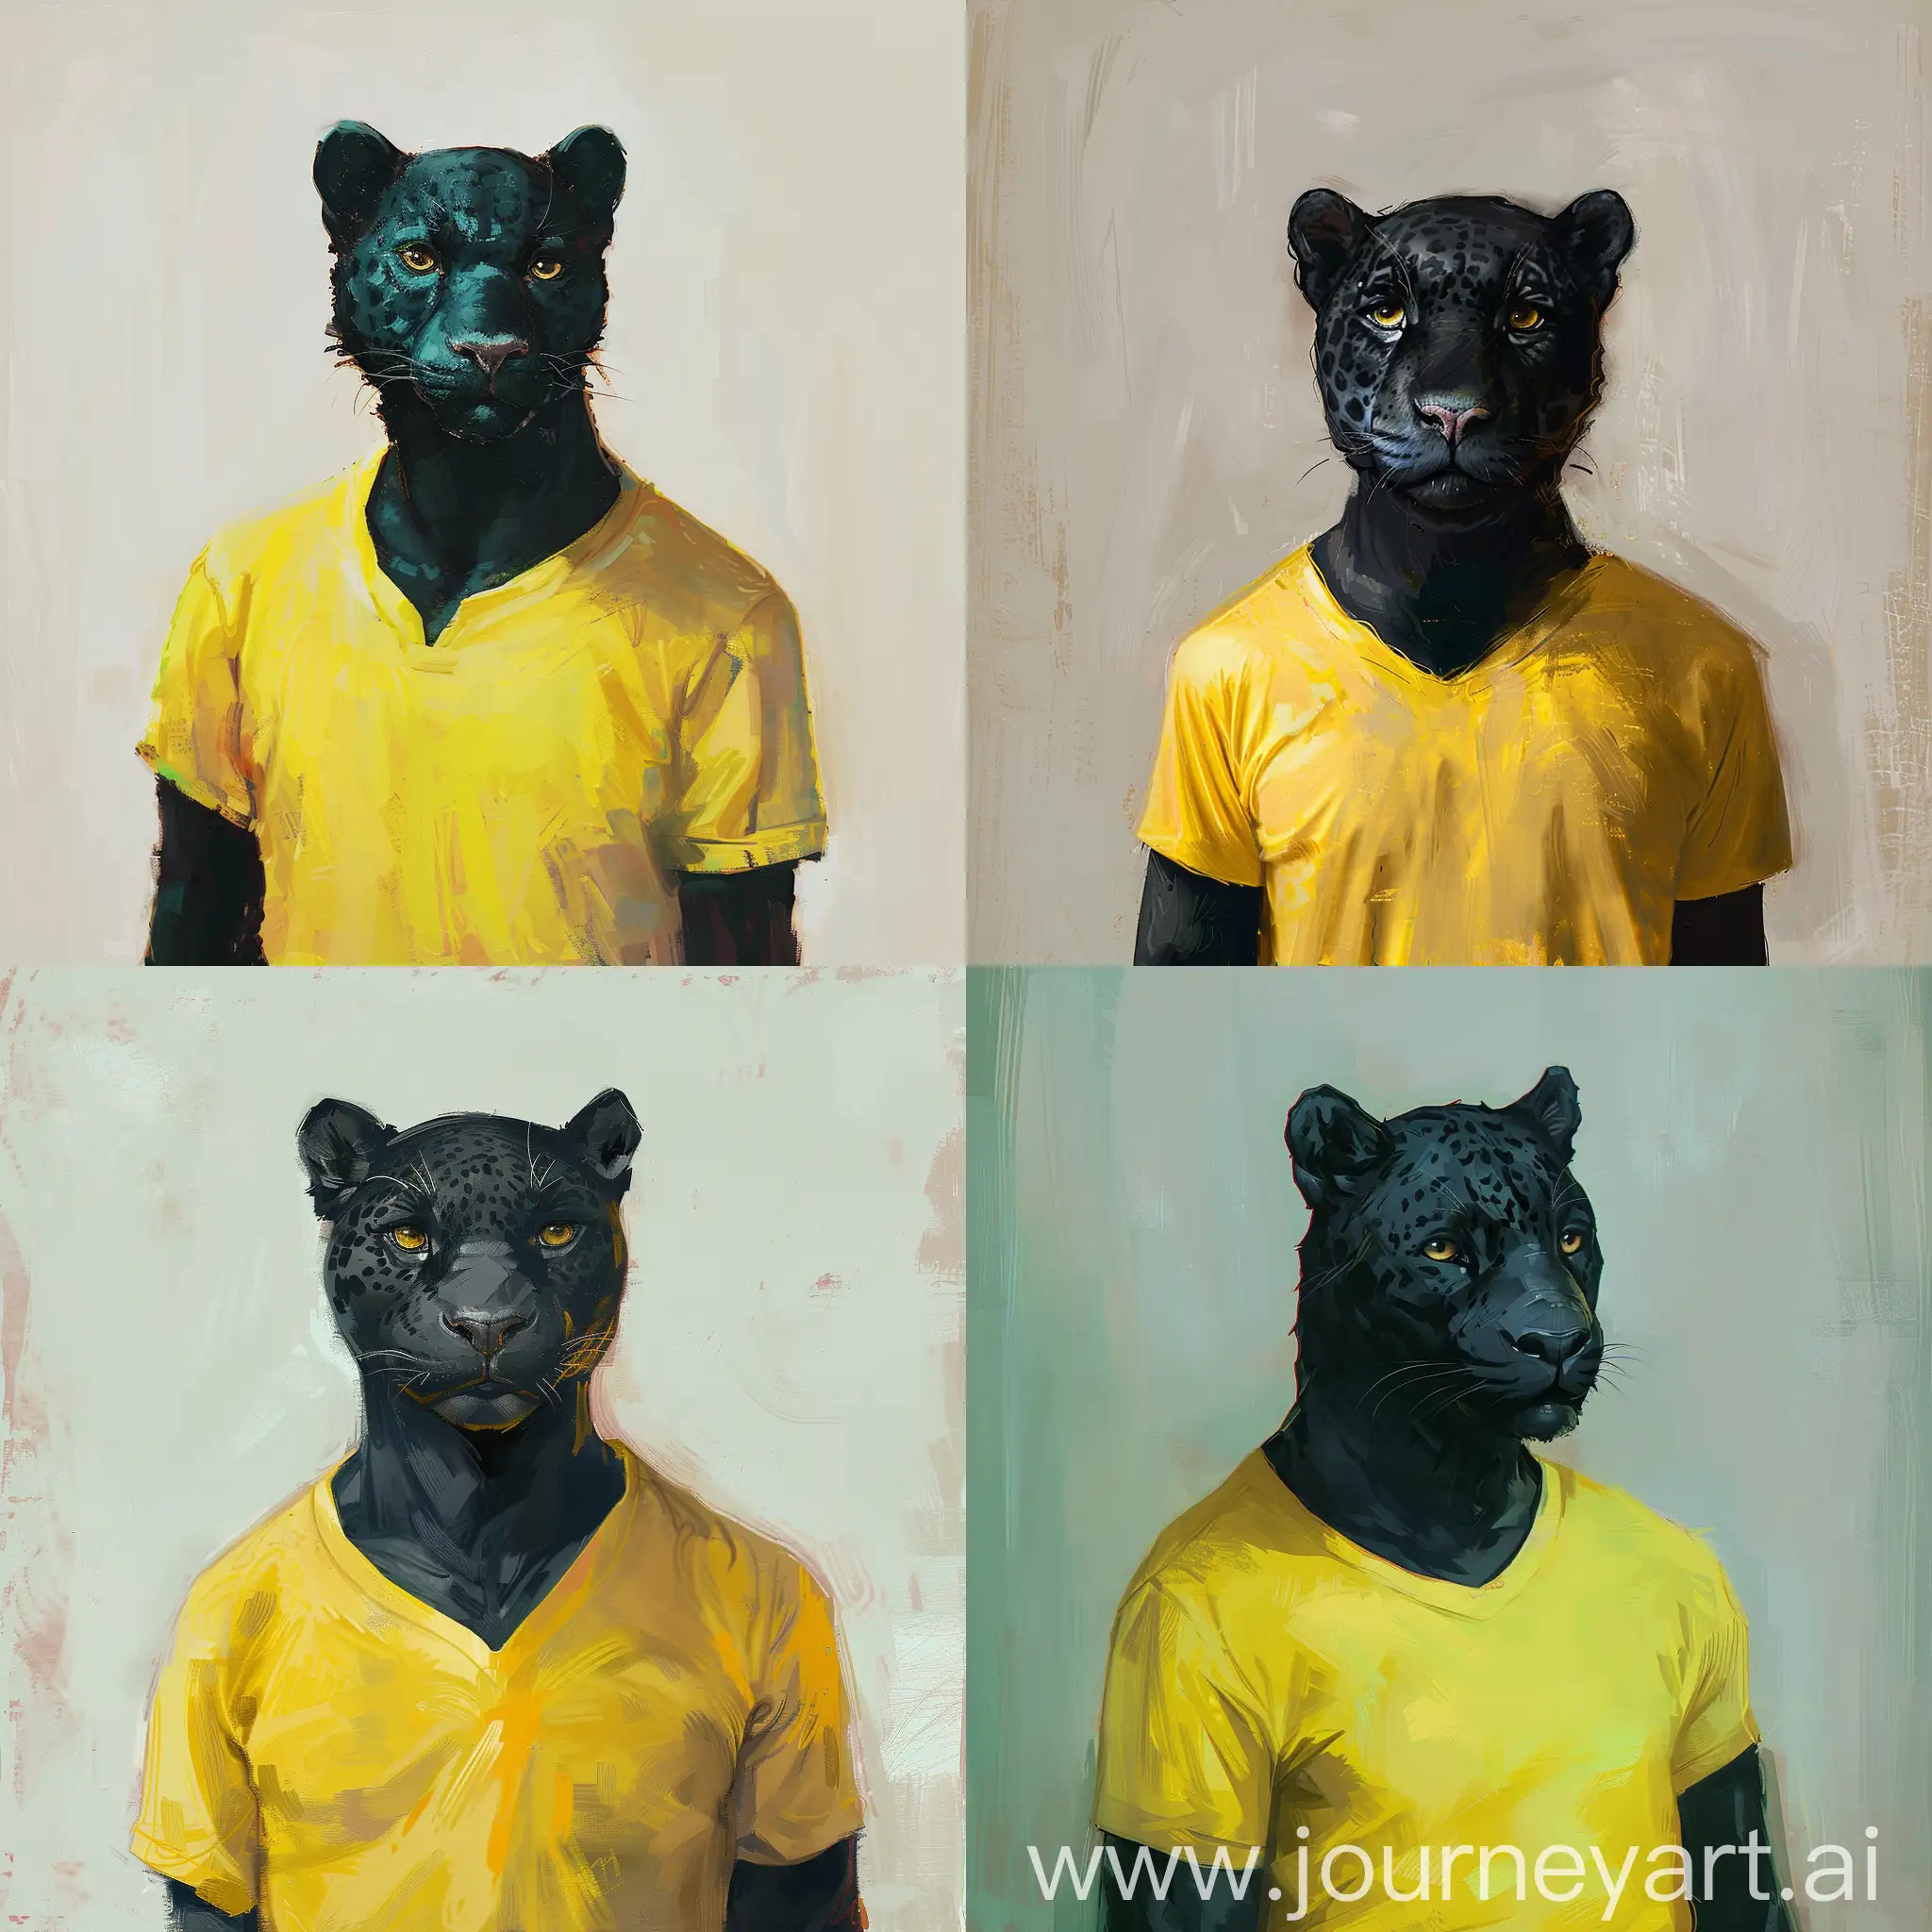 Whimsical-Edward-Hopper-Style-Portrait-of-Suave-Humanized-Black-Jaguar-in-Vibrant-Yellow-TShirt